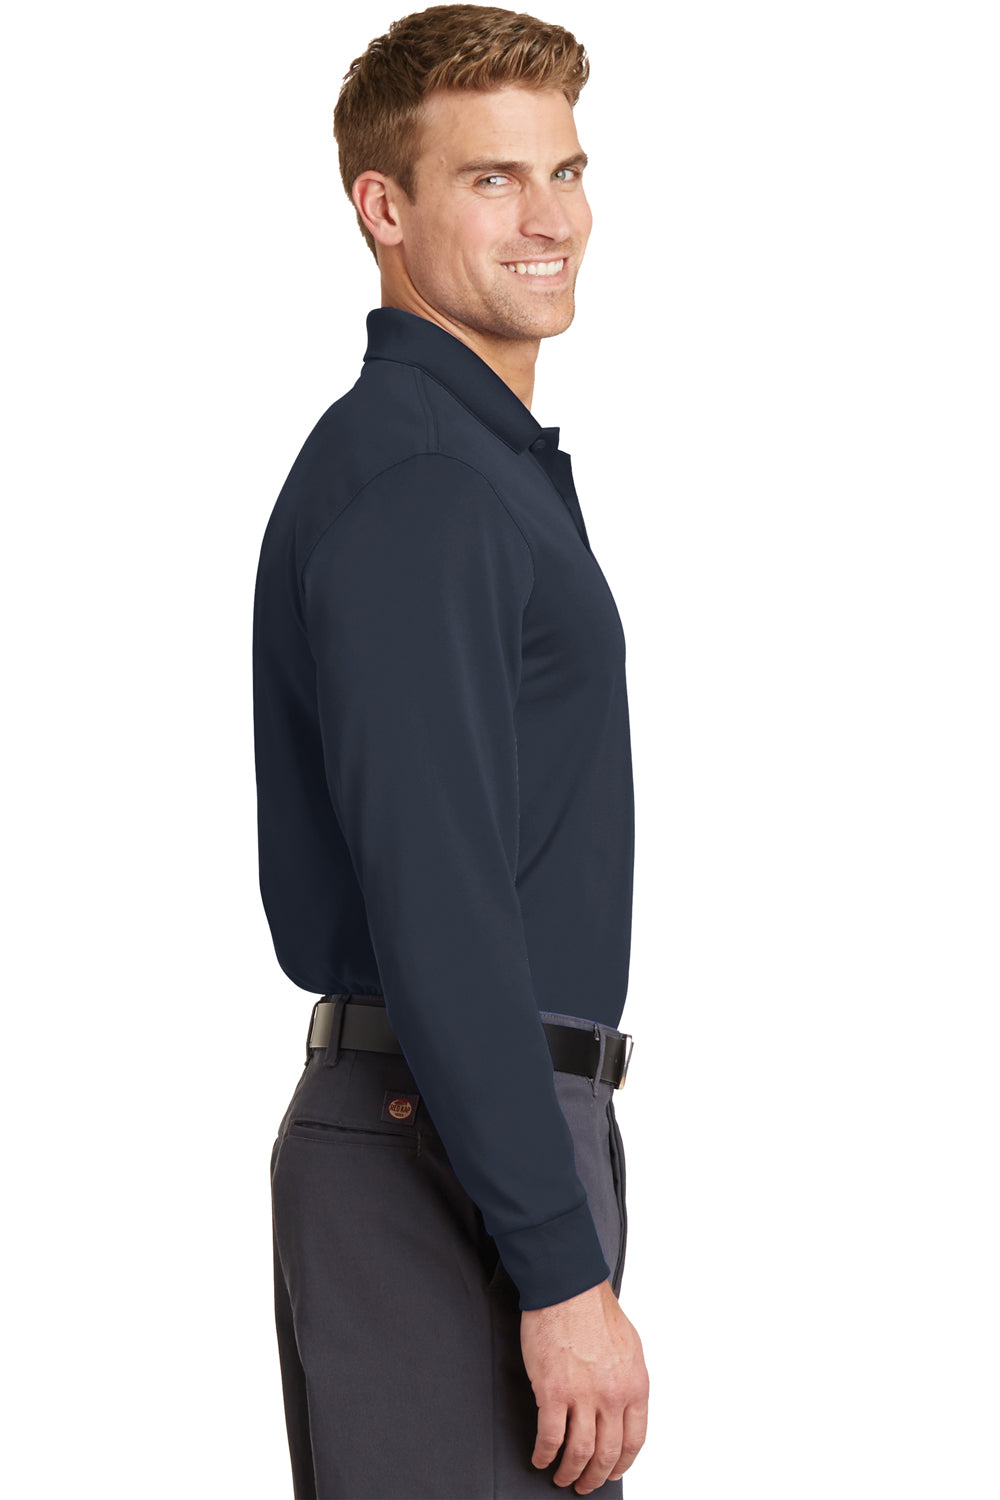 CornerStone CS412LS Mens Select Moisture Wicking Long Sleeve Polo Shirt Navy Blue Side